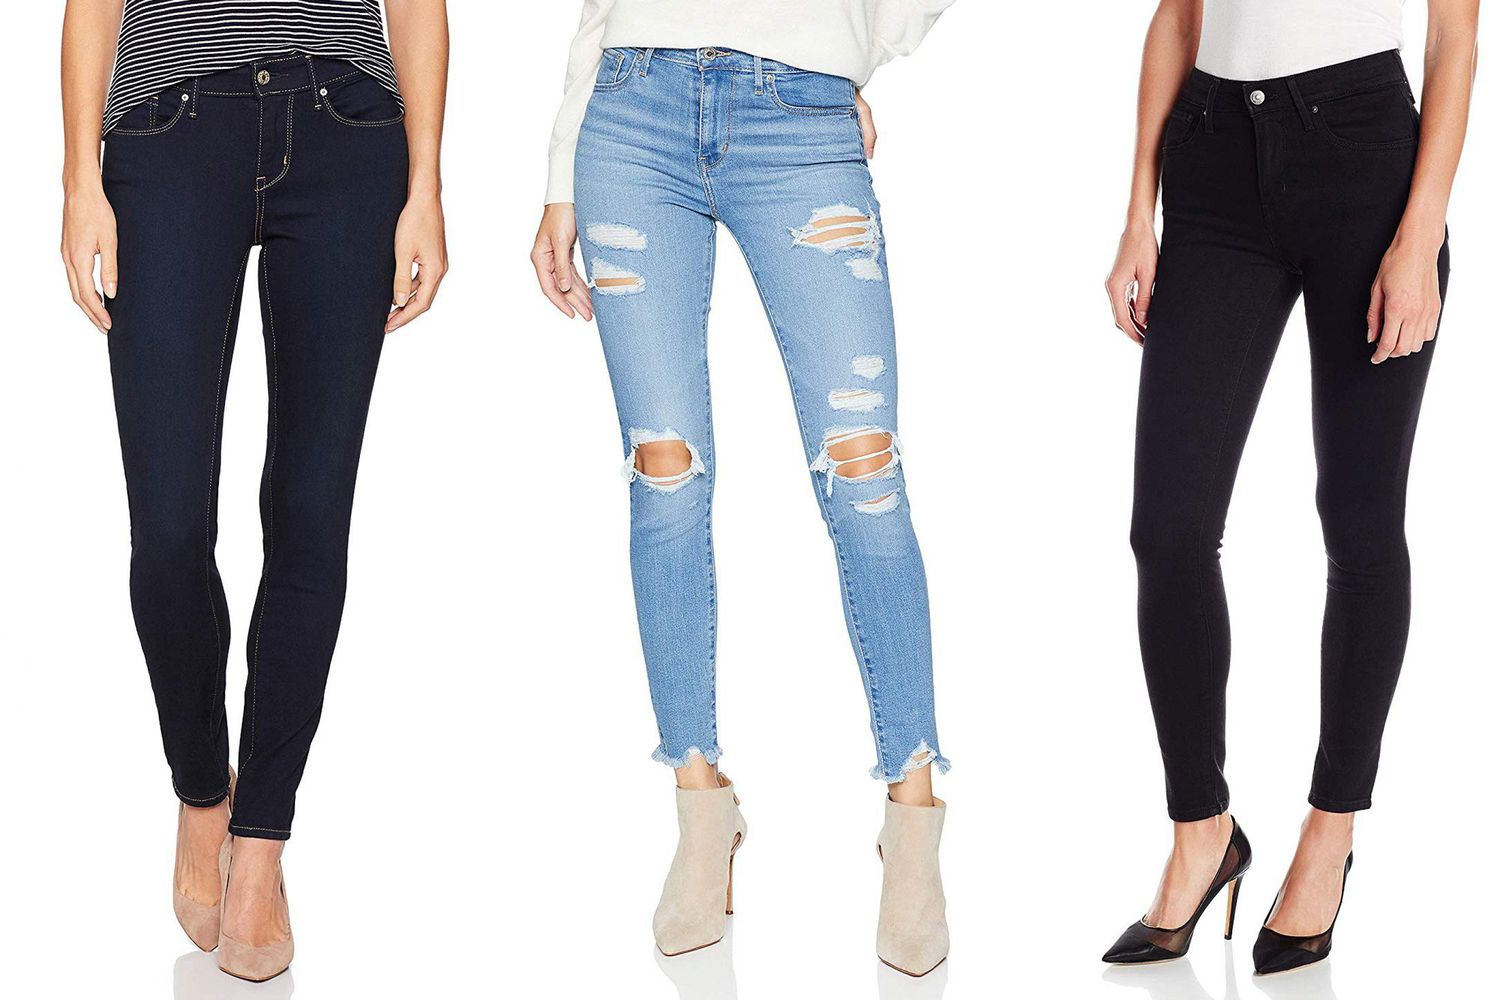 16 Best Jeans for Women on Amazon 